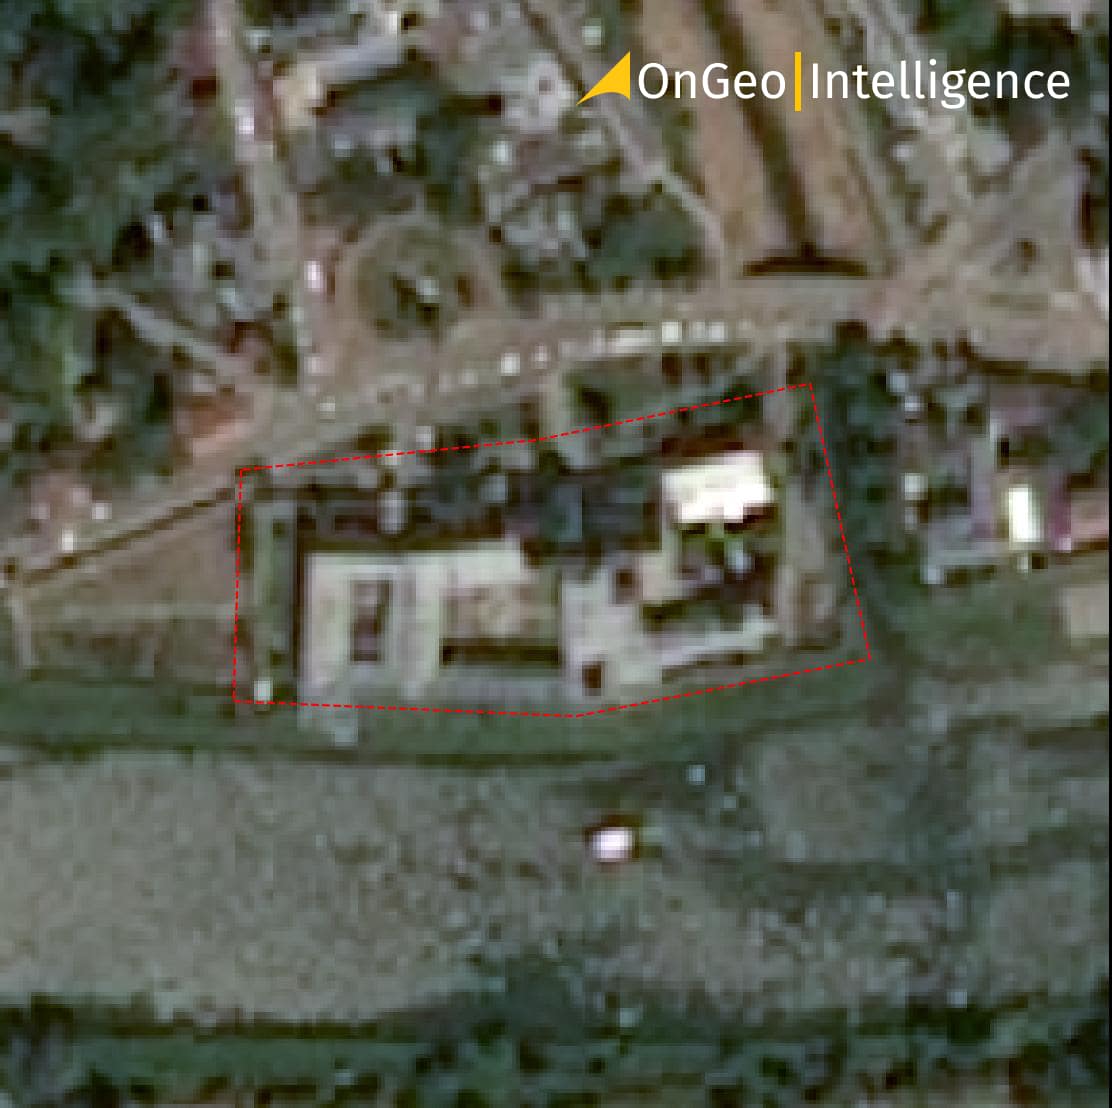 Sample satellite image, 1.3-meter resolution, OnGeo™ Intelligence.